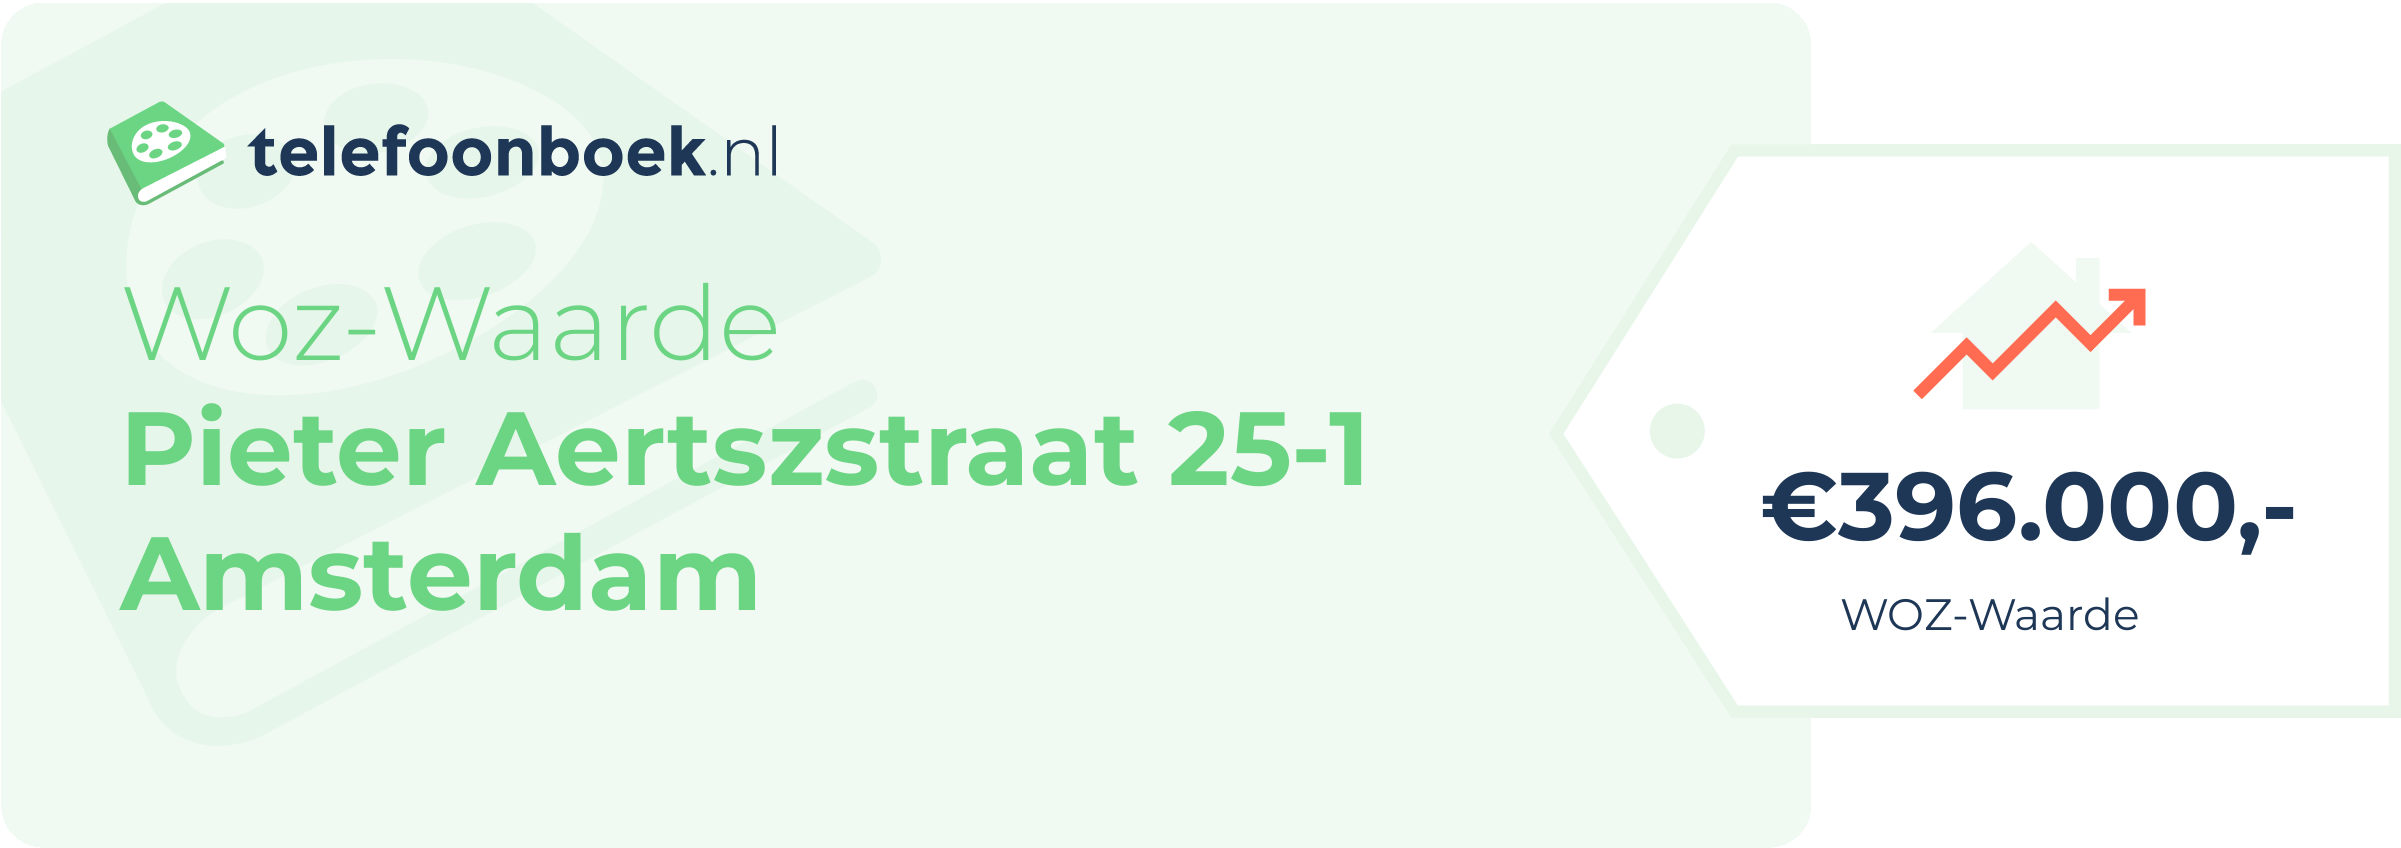 WOZ-waarde Pieter Aertszstraat 25-1 Amsterdam